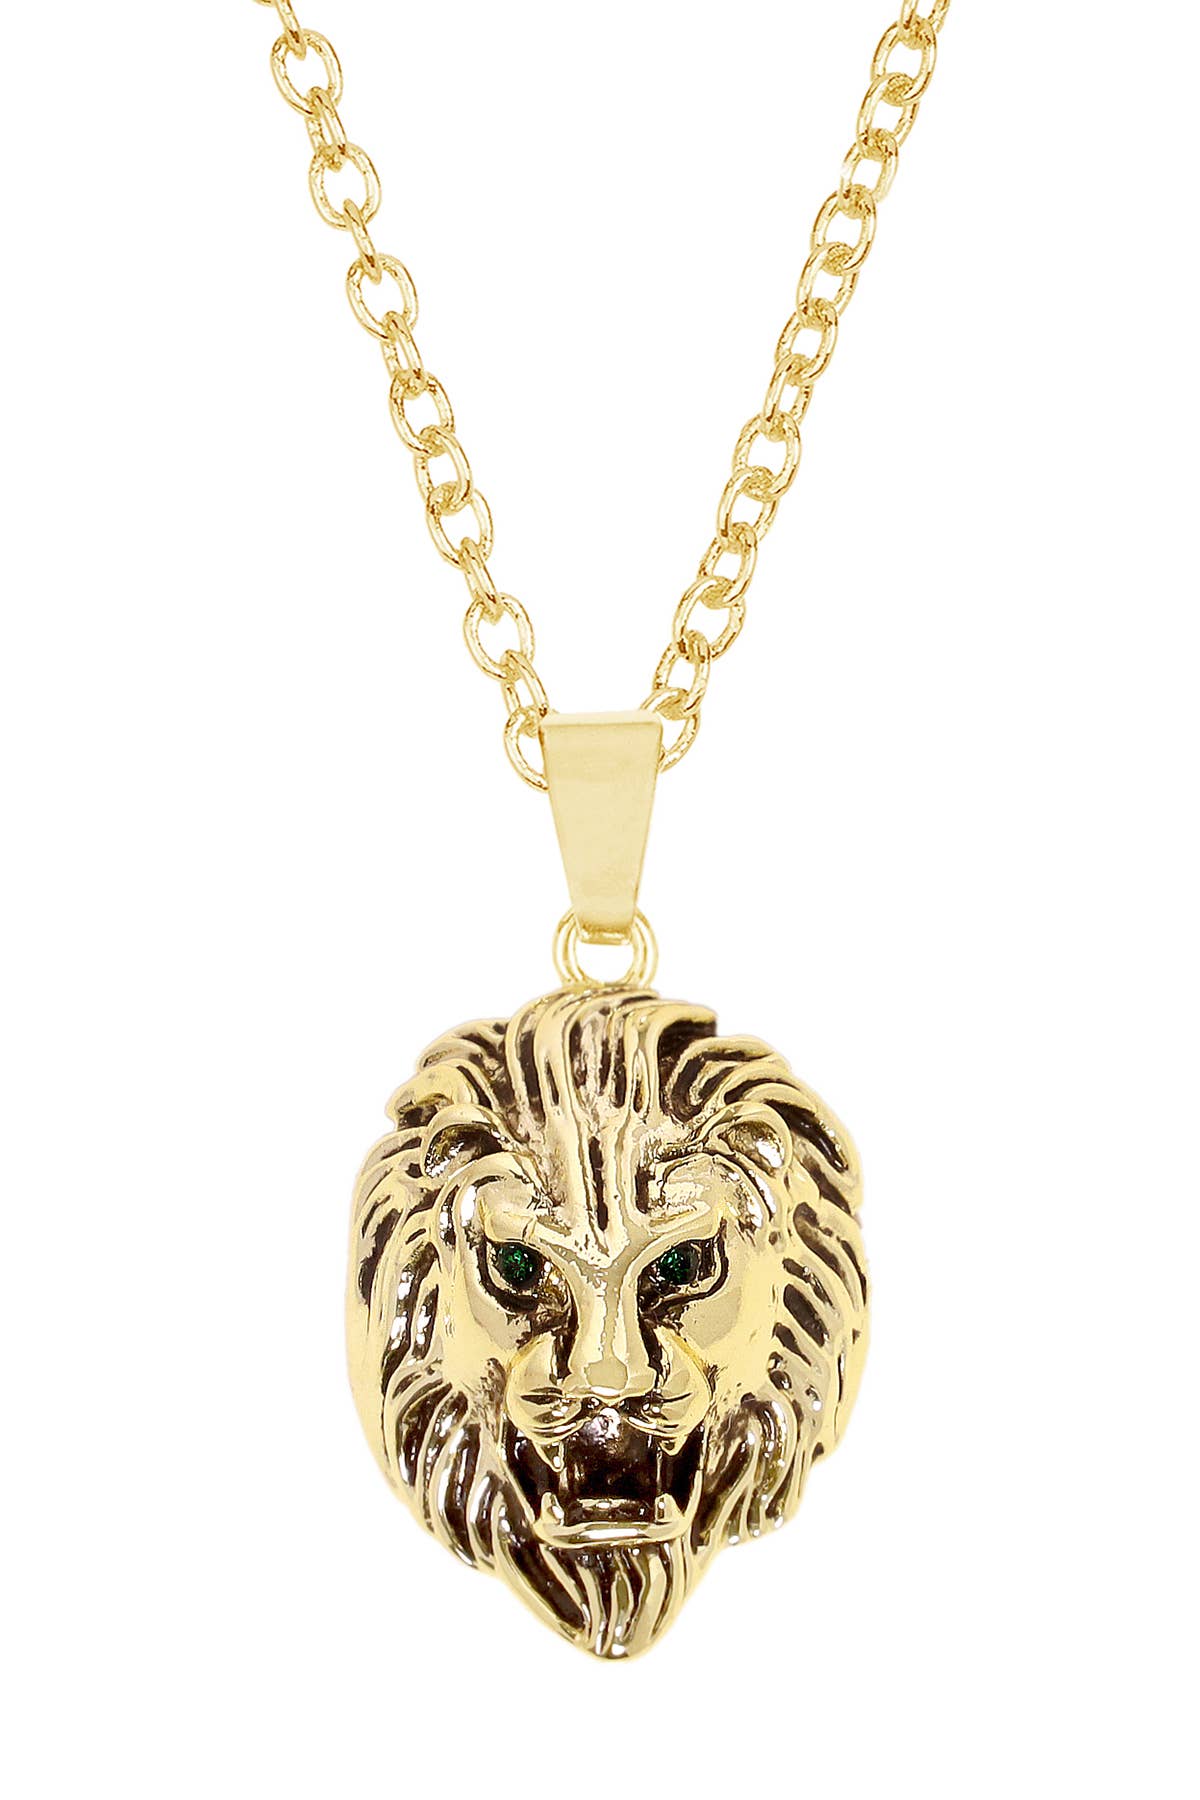 14k Gold Filled Lion Pendant Necklace - GF